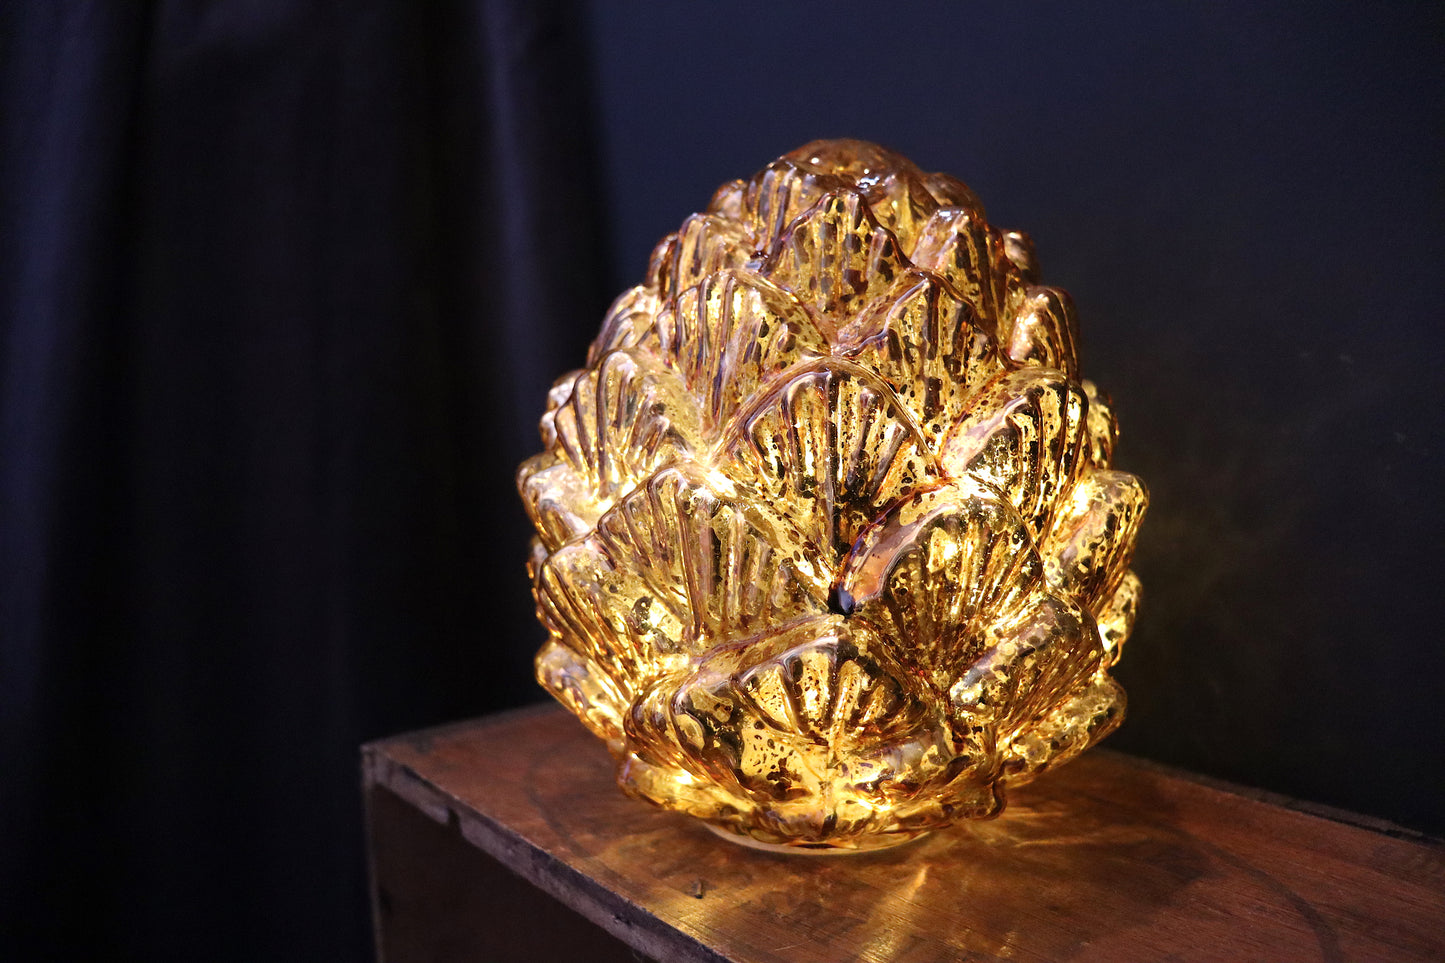 Antique Gold Light Up Artichoke